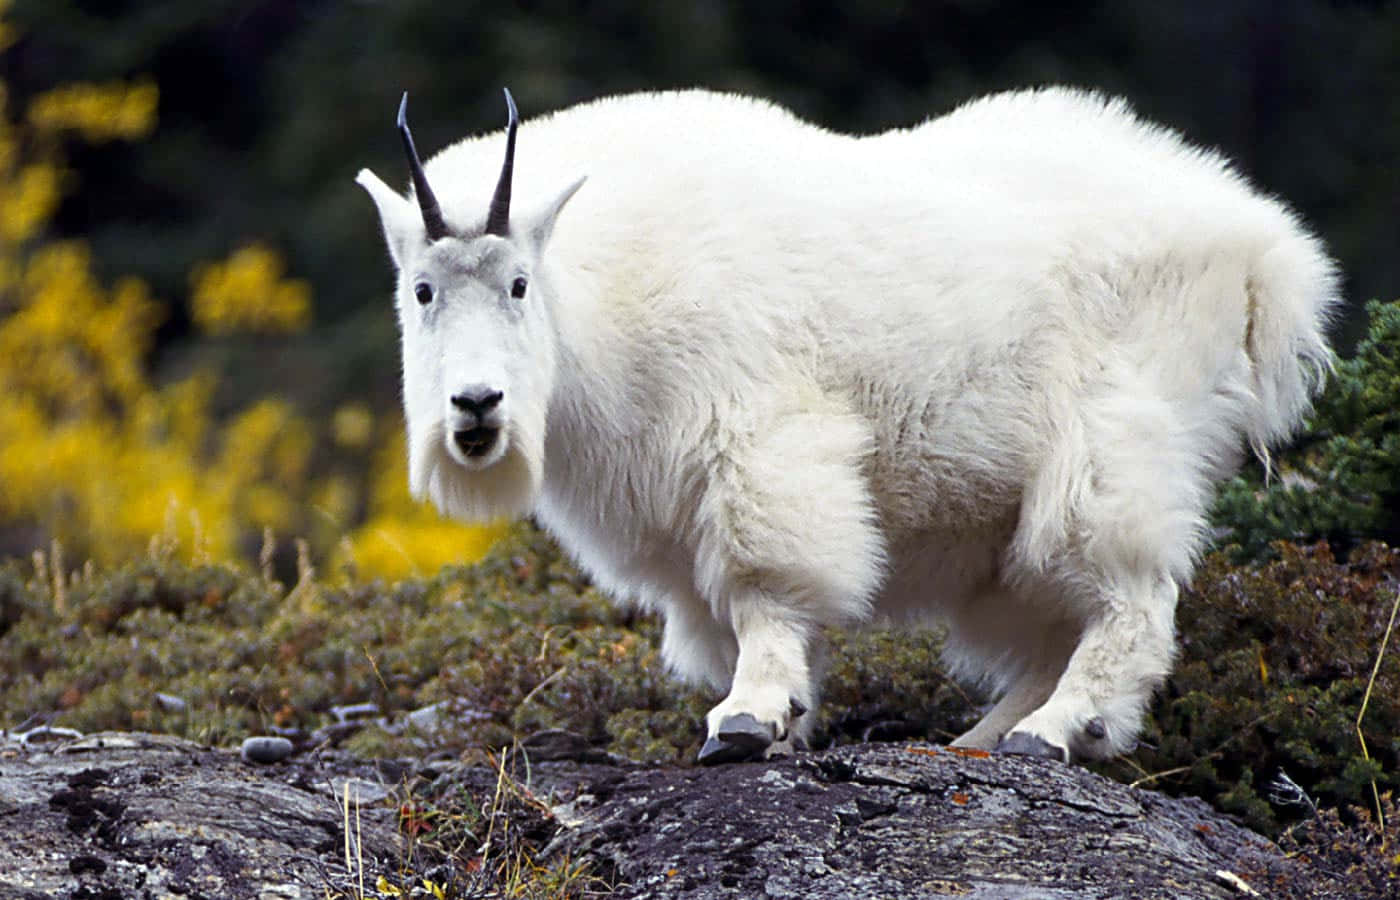 A majestic mountain goat on rocks